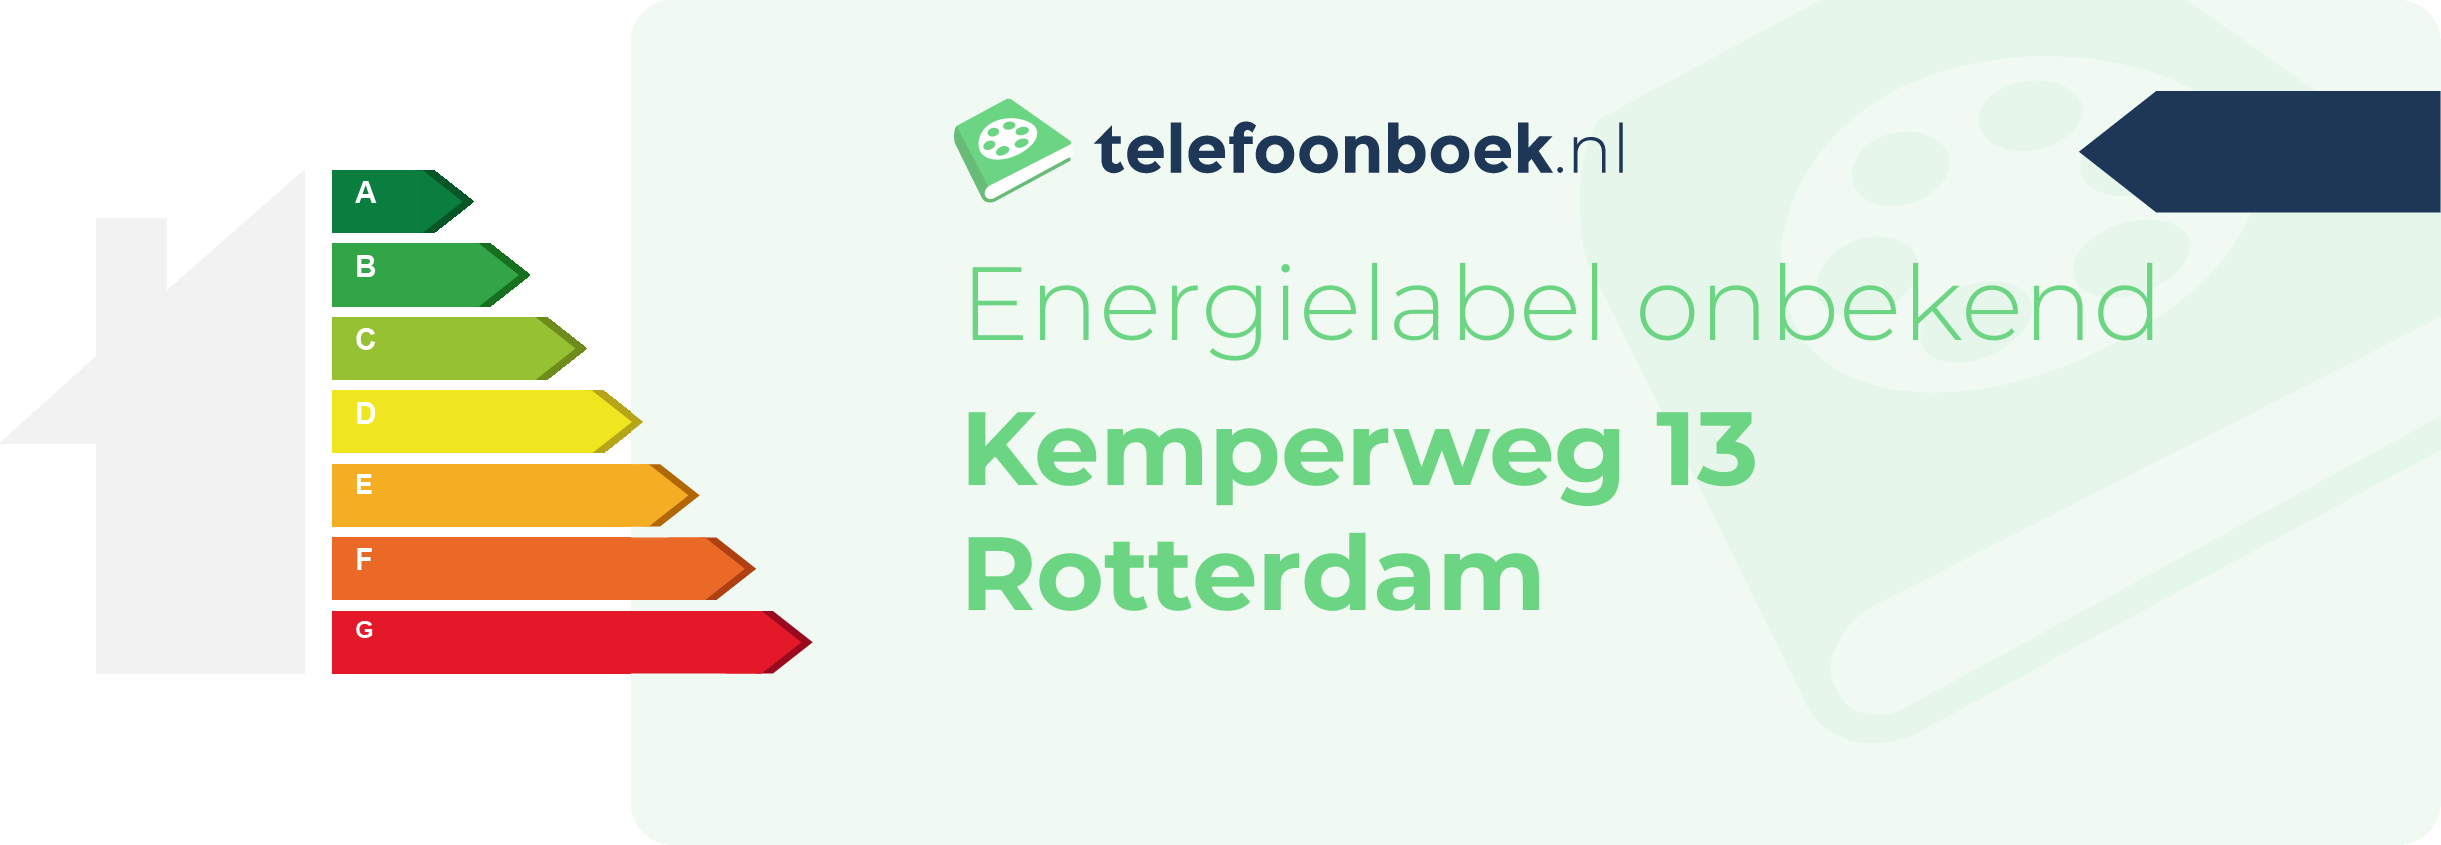 Energielabel Kemperweg 13 Rotterdam